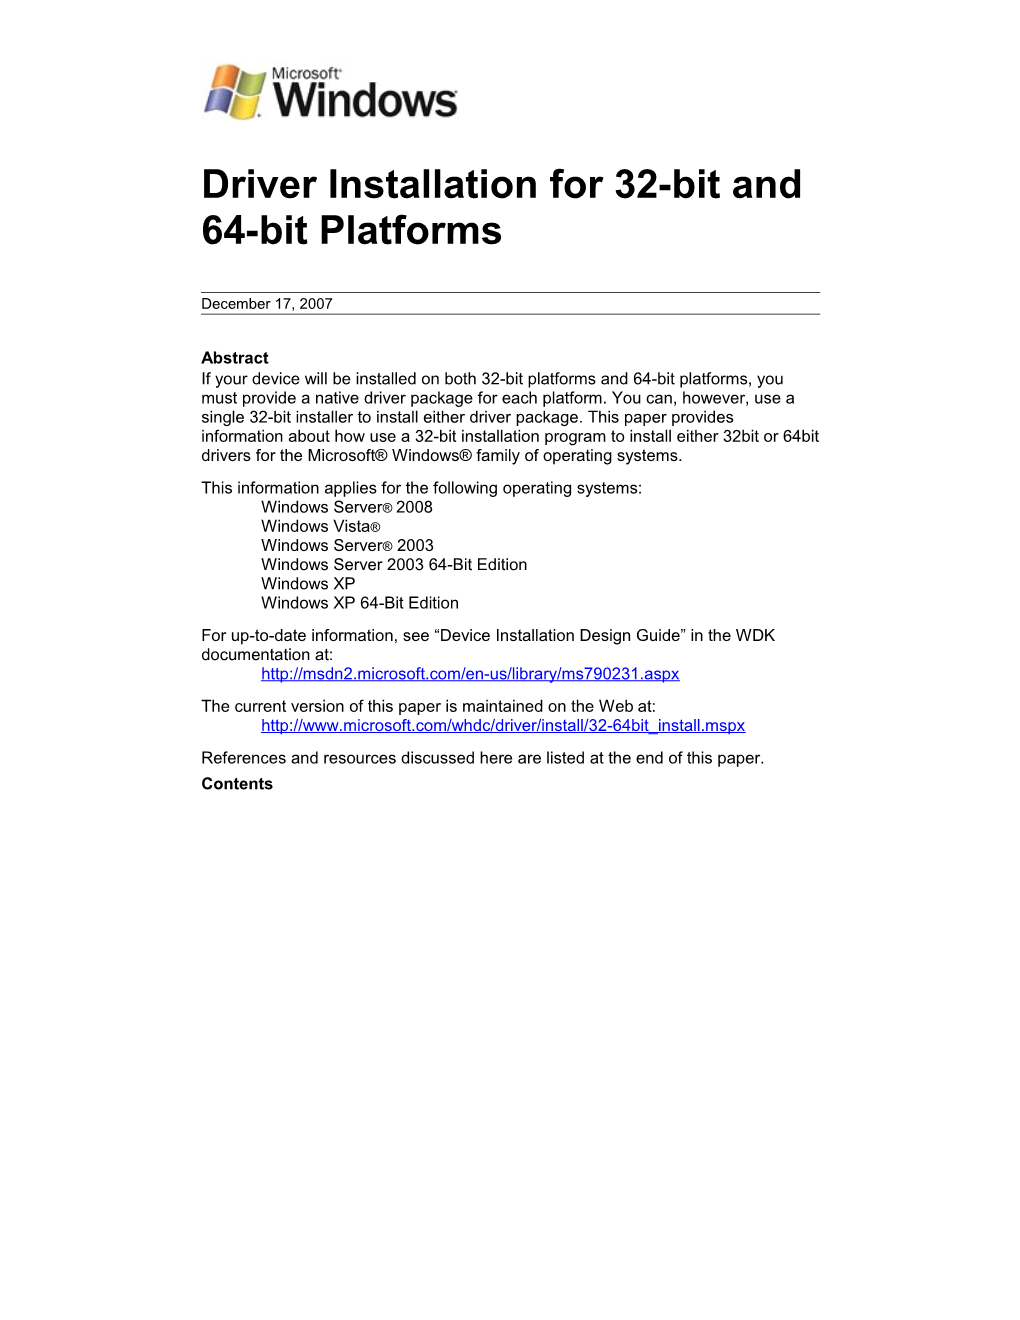 Driver Installation for 32-Bit and 64-Bit Platforms